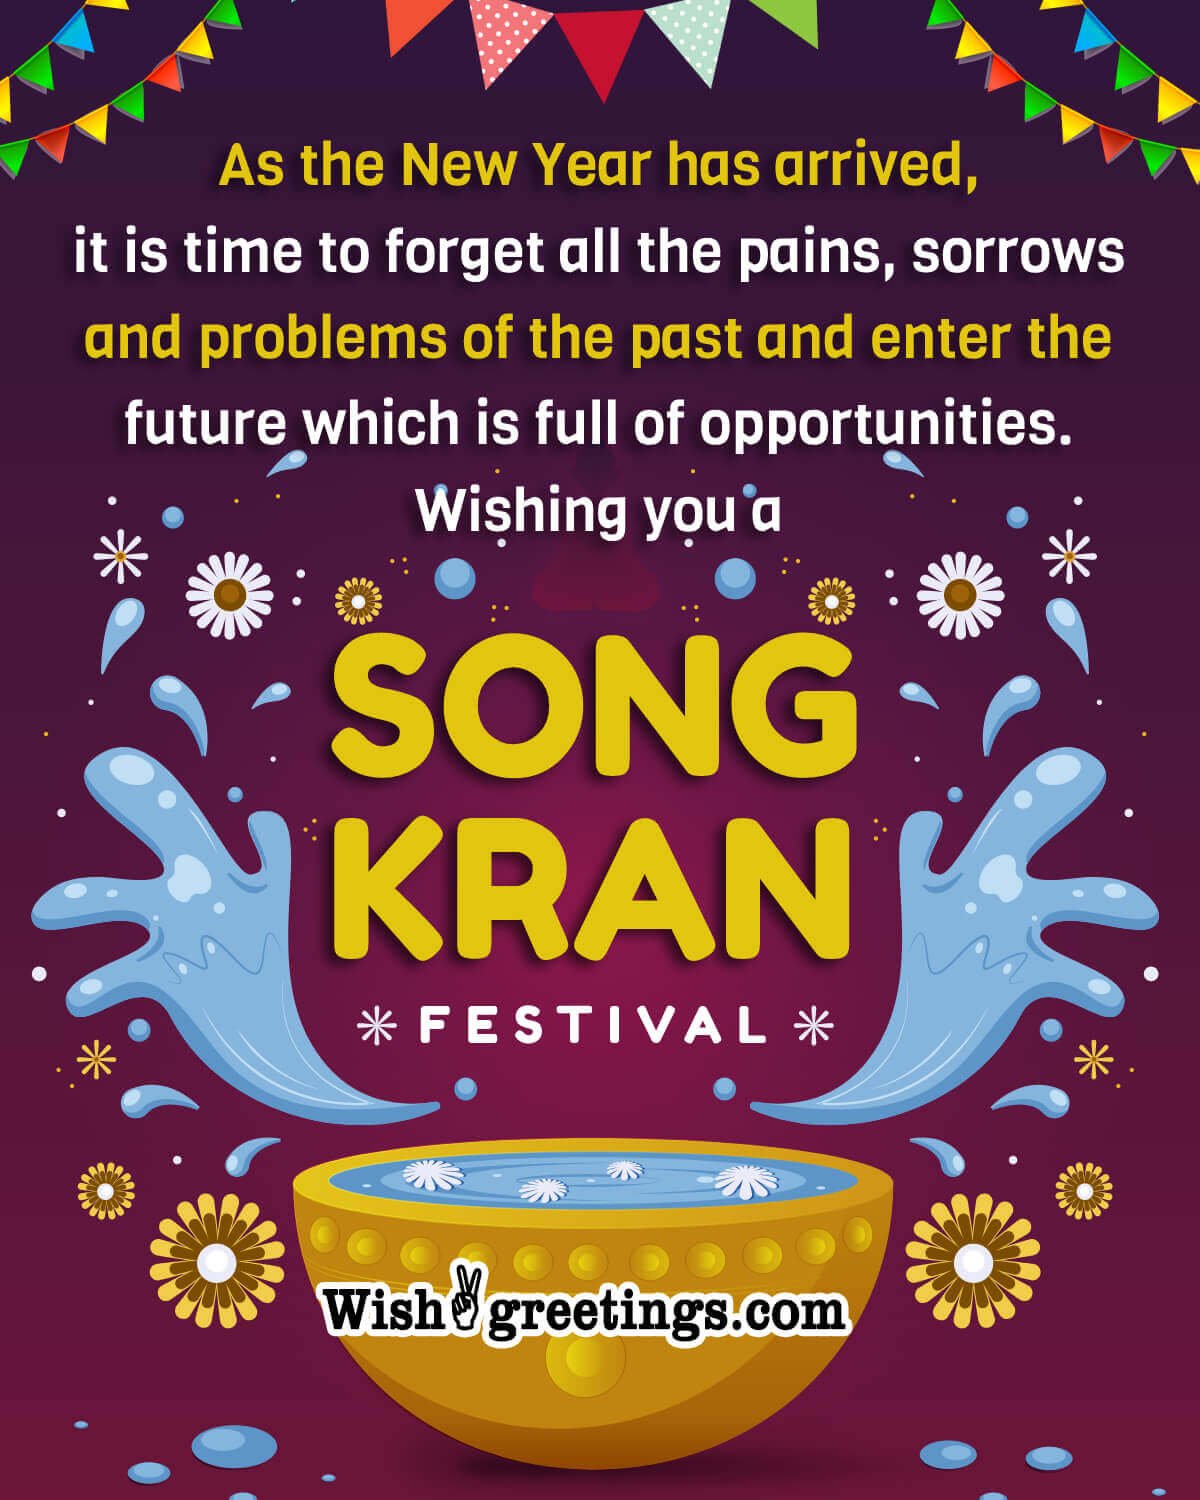 Songkran Festival Greeting Image